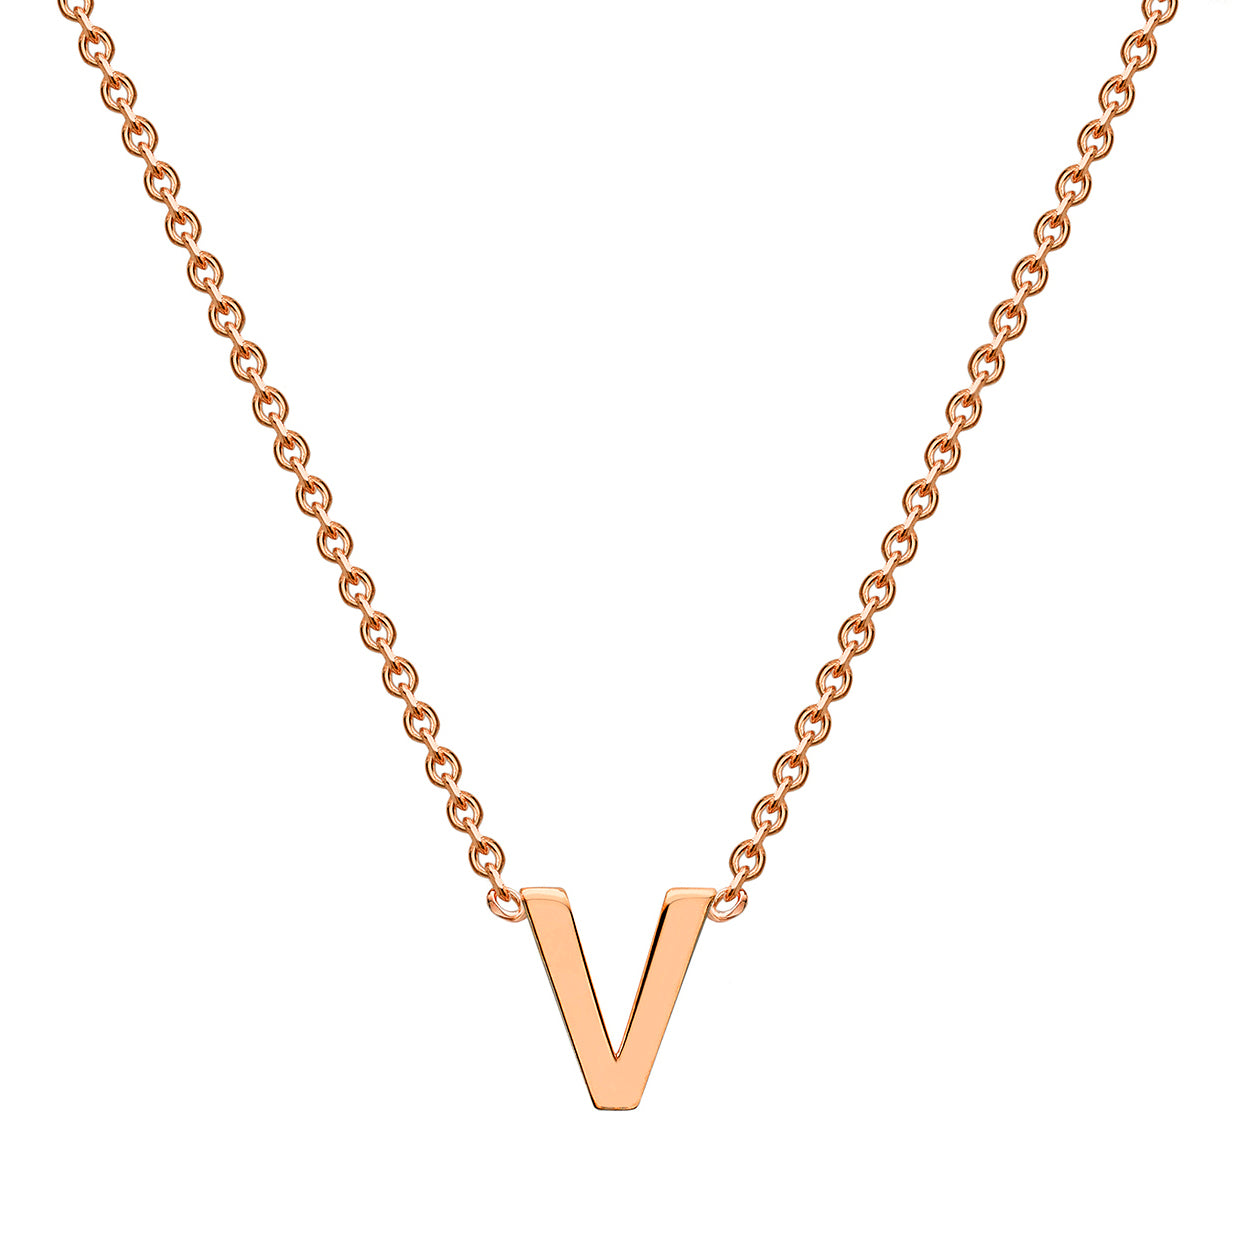 9ct R/G Initial Letter "V" Necklace 38+5cm